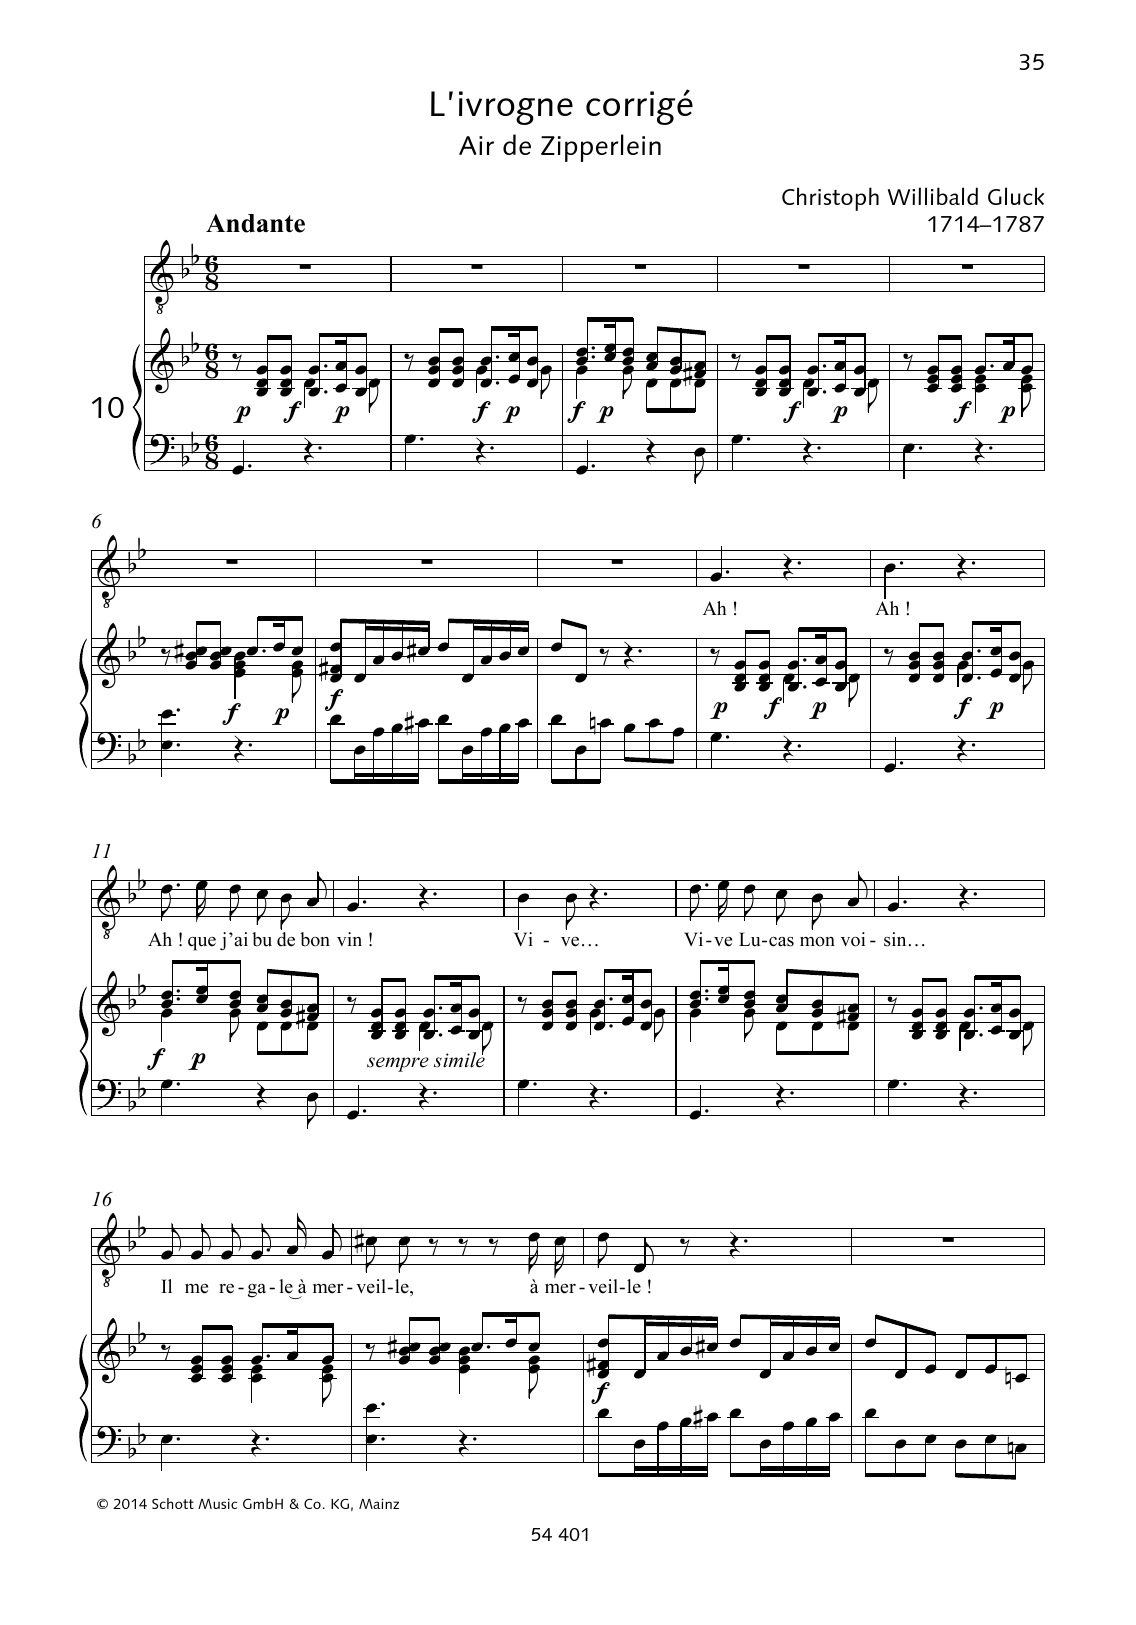 Christoph Willibald Gluck Ah! Que j'ai bu de bon vin! Sheet Music Notes & Chords for Piano & Vocal - Download or Print PDF